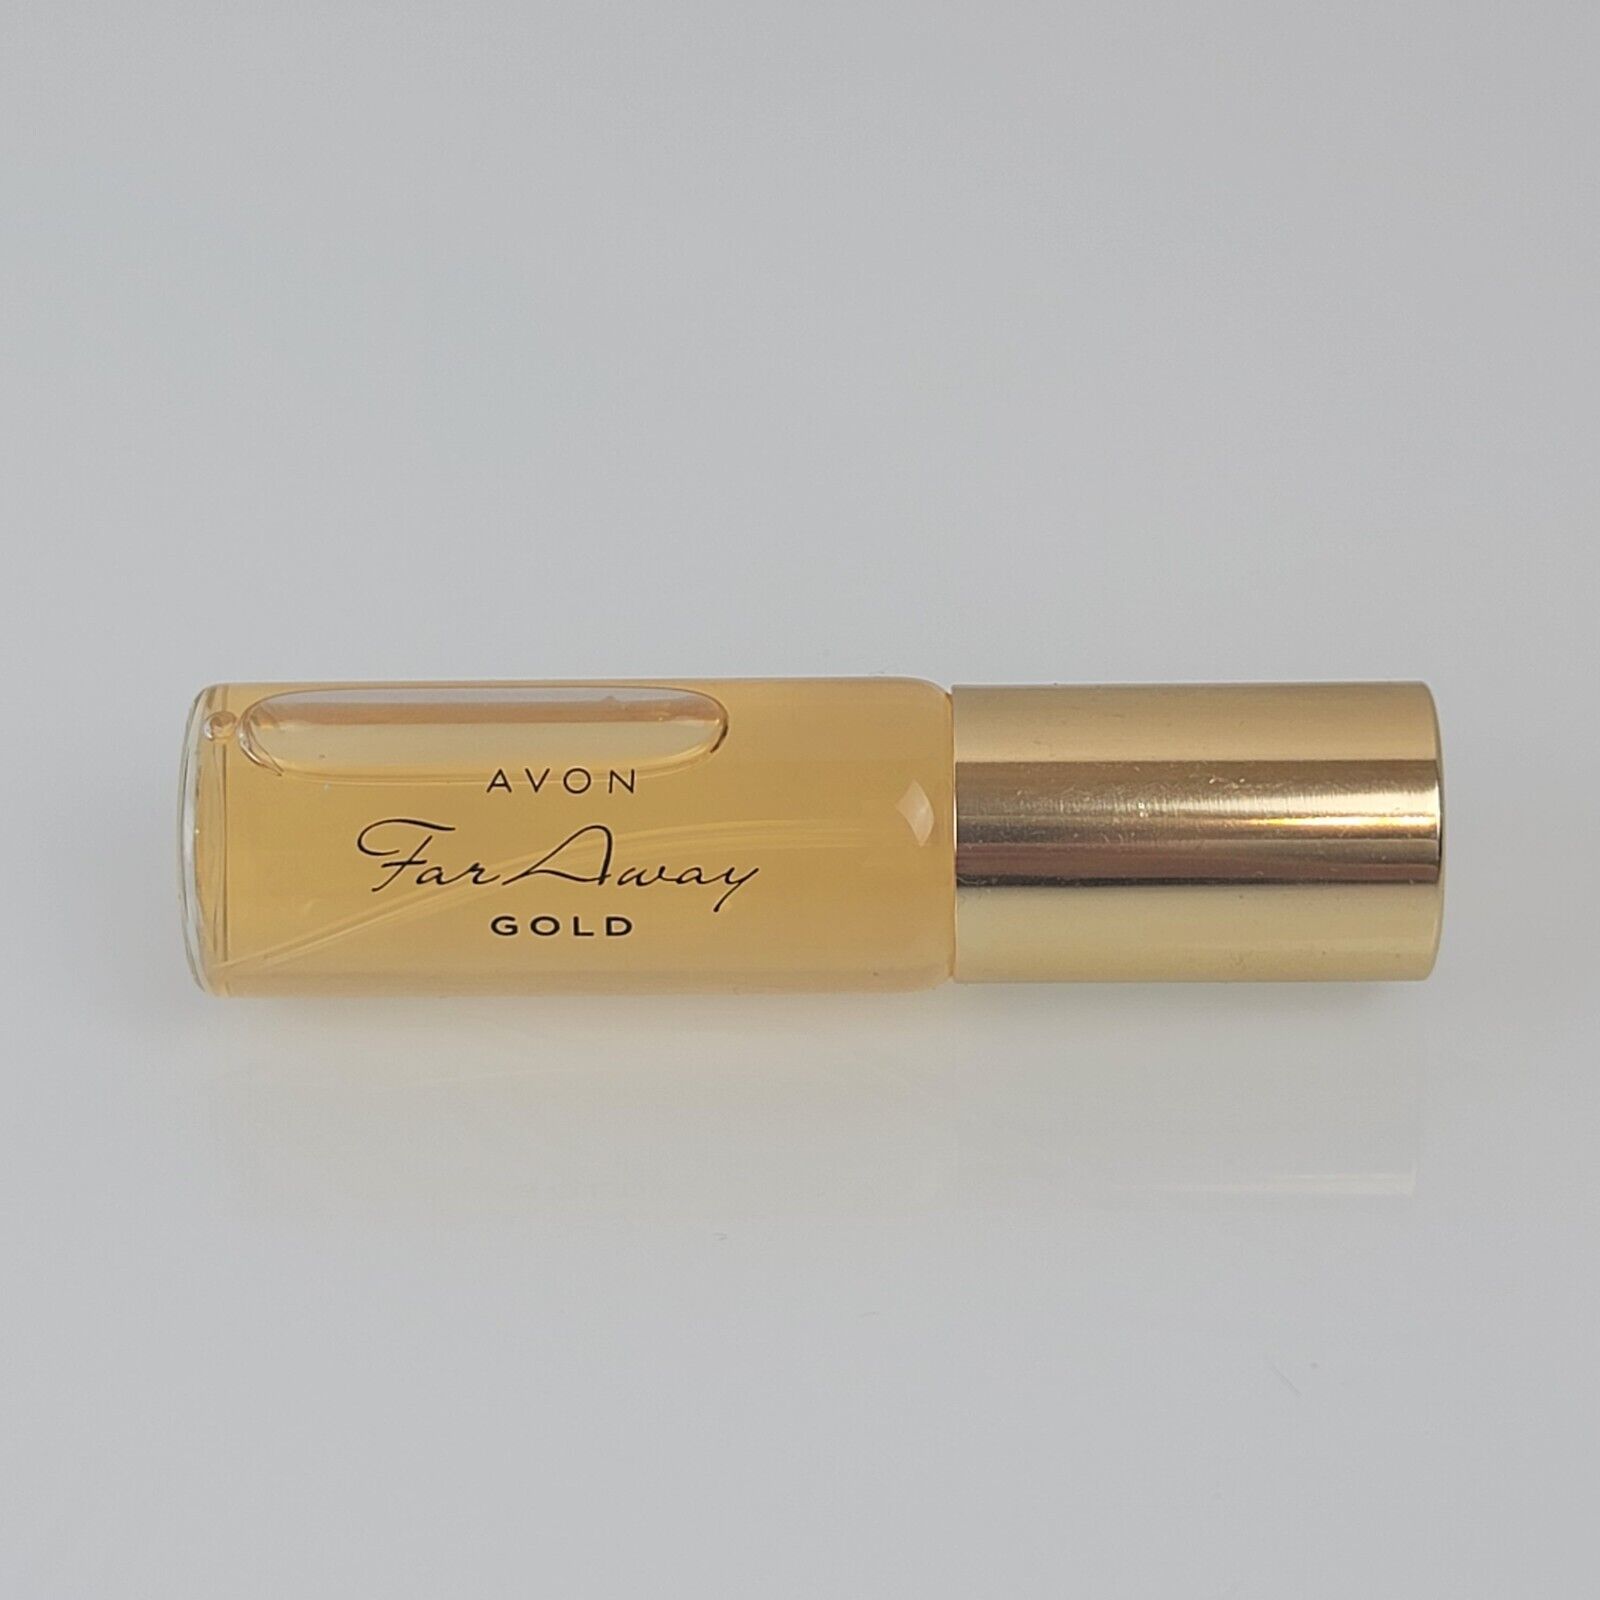 Primary image for Avon Faraway Gold eau de parfum spray .5 fl. oz. Travel Size